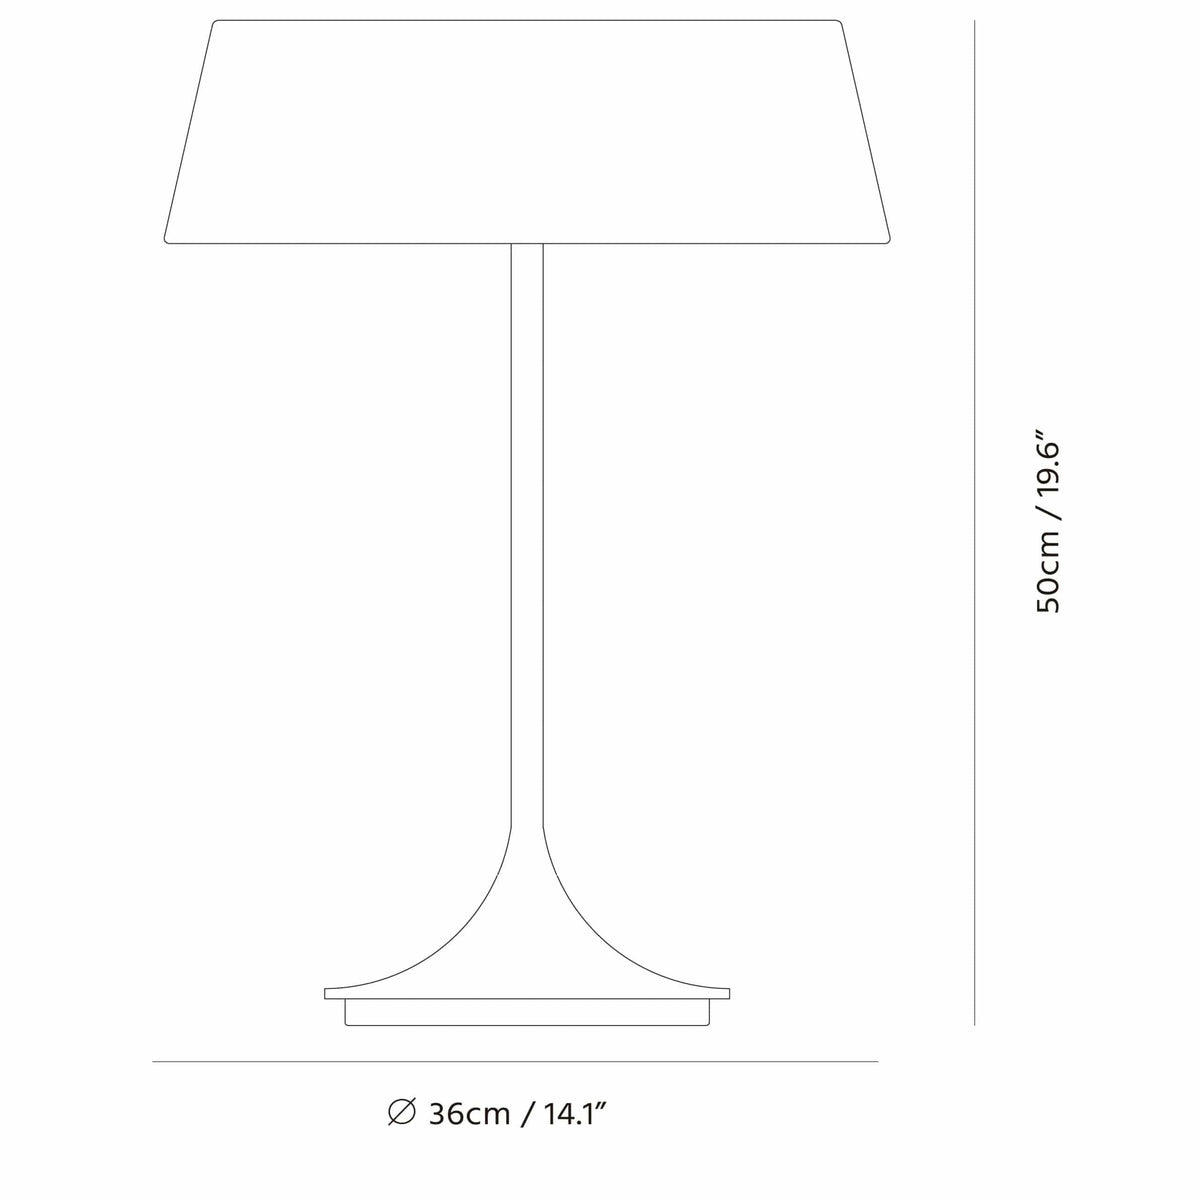 Seed Design - China Table Lamp - SQ-6350MDJ-1-BK | Montreal Lighting & Hardware